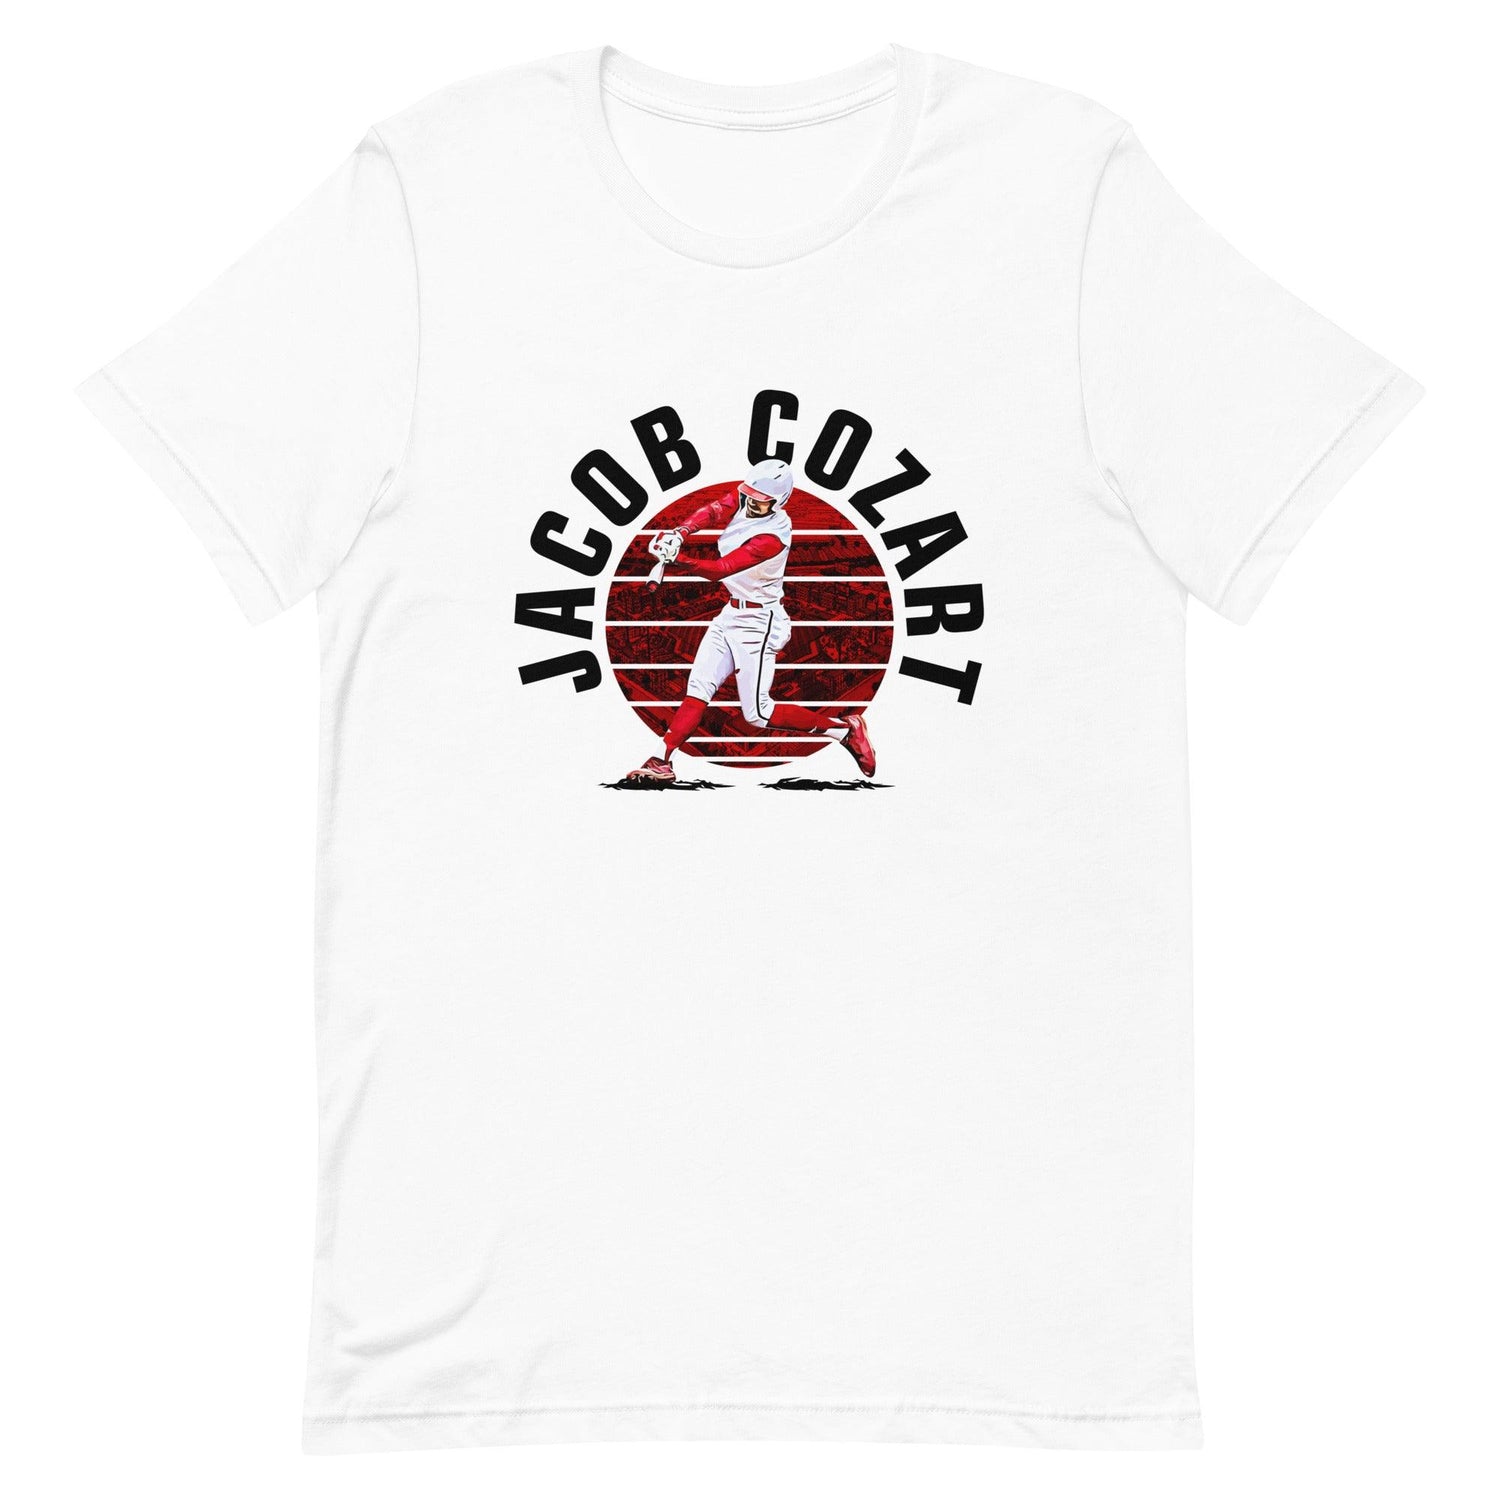 Jacob Cozart “Essential” t-shirt - Fan Arch